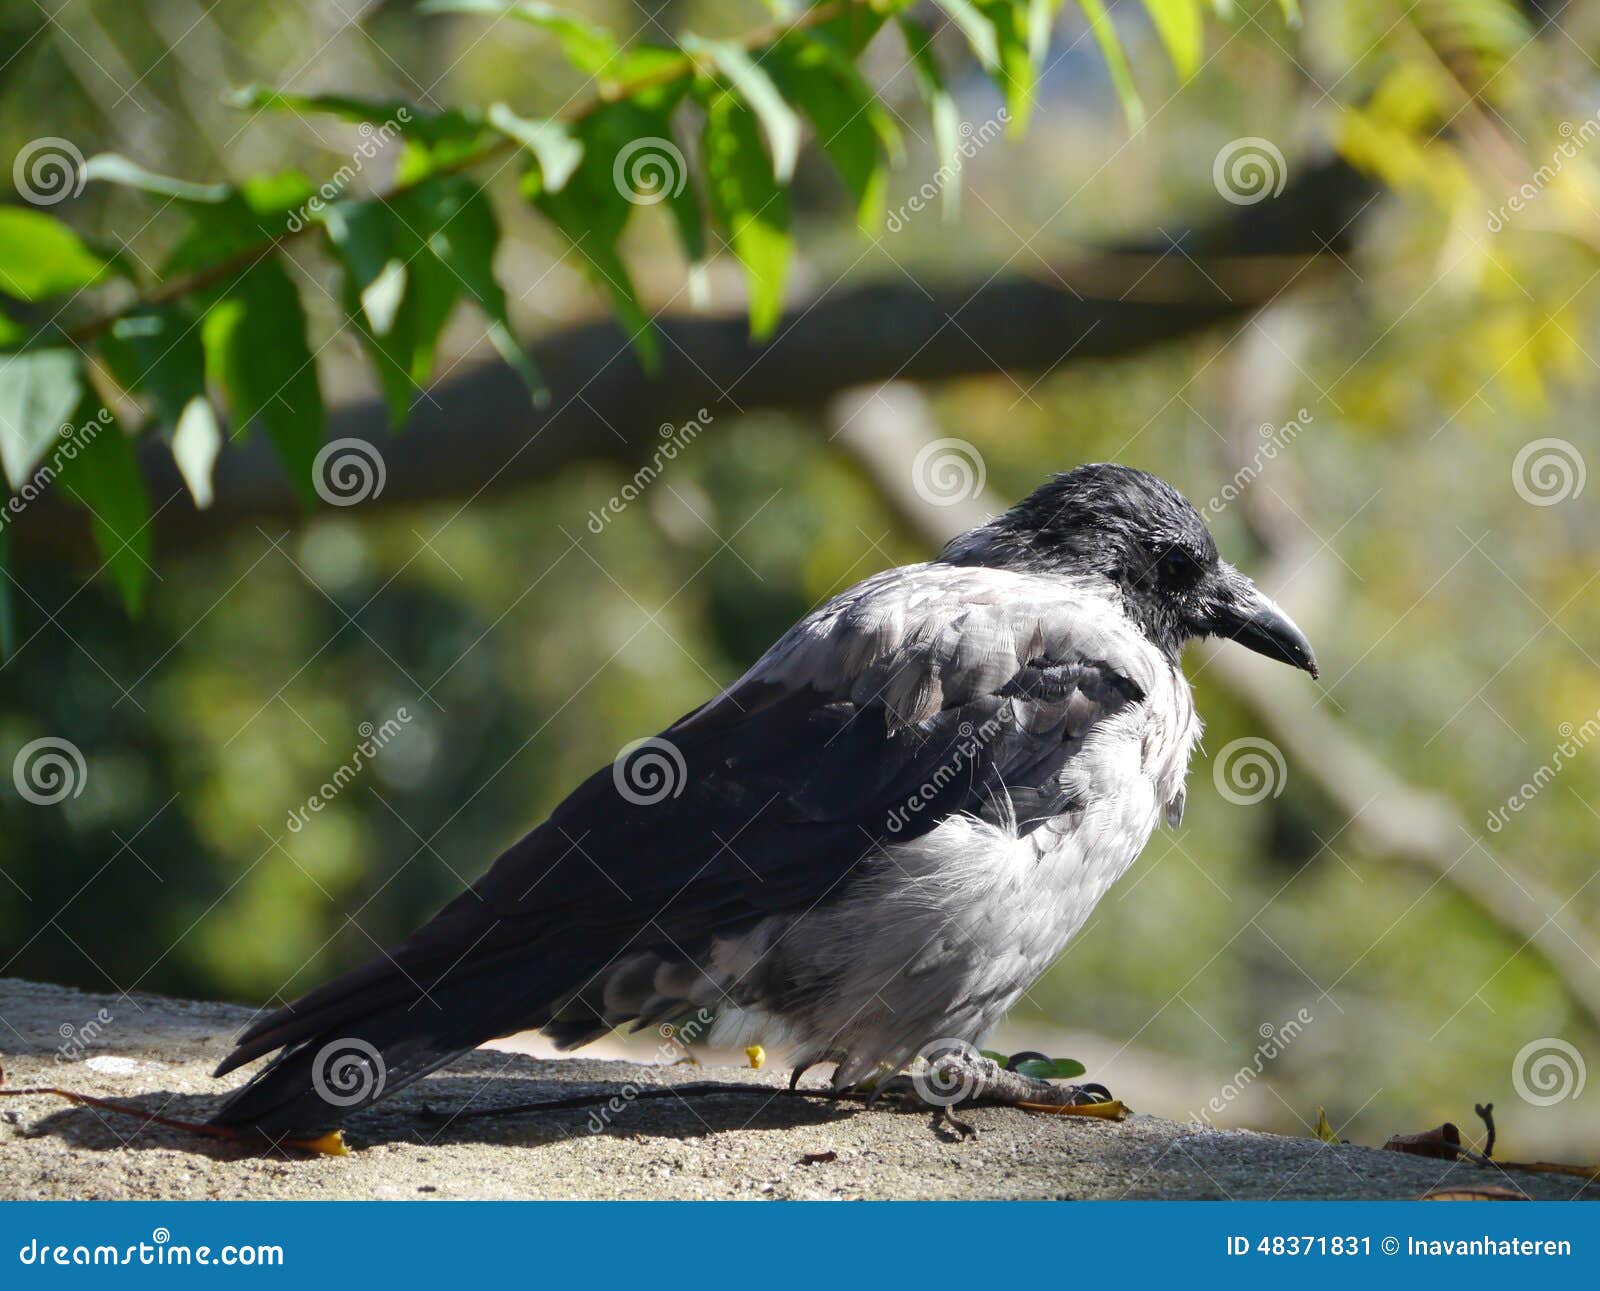 a hooded crow or corvus cornix